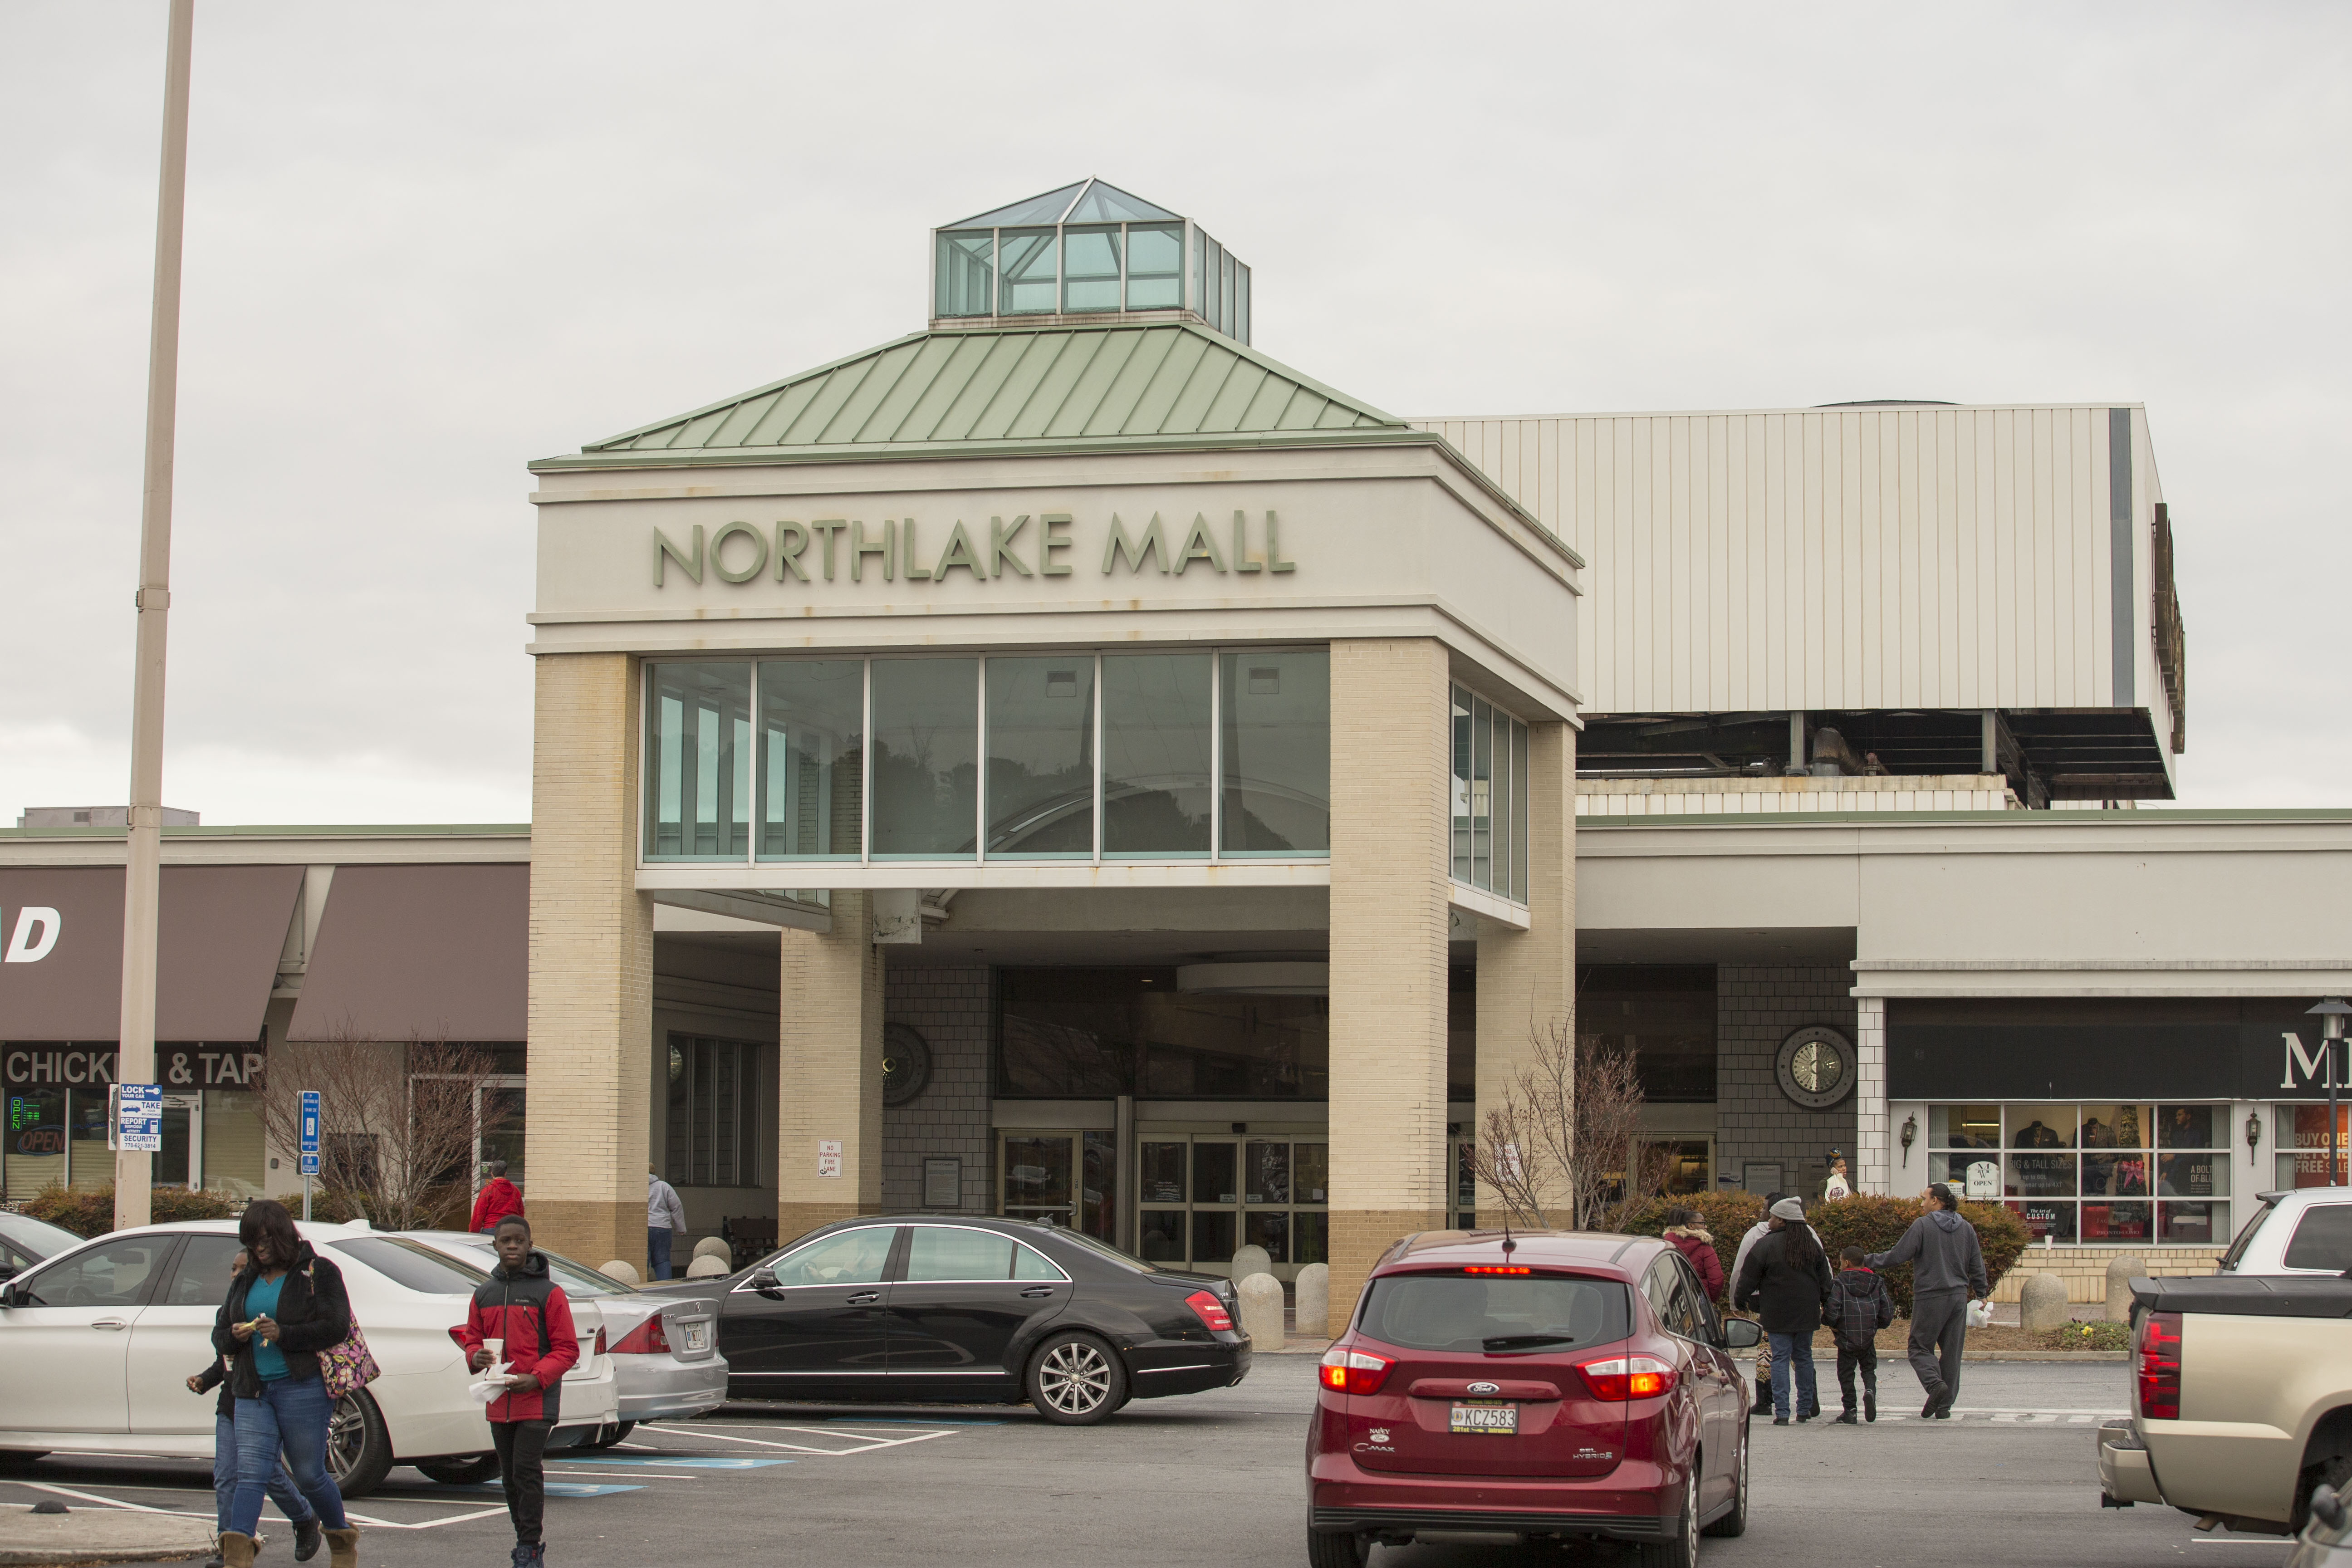 clarks northlake mall